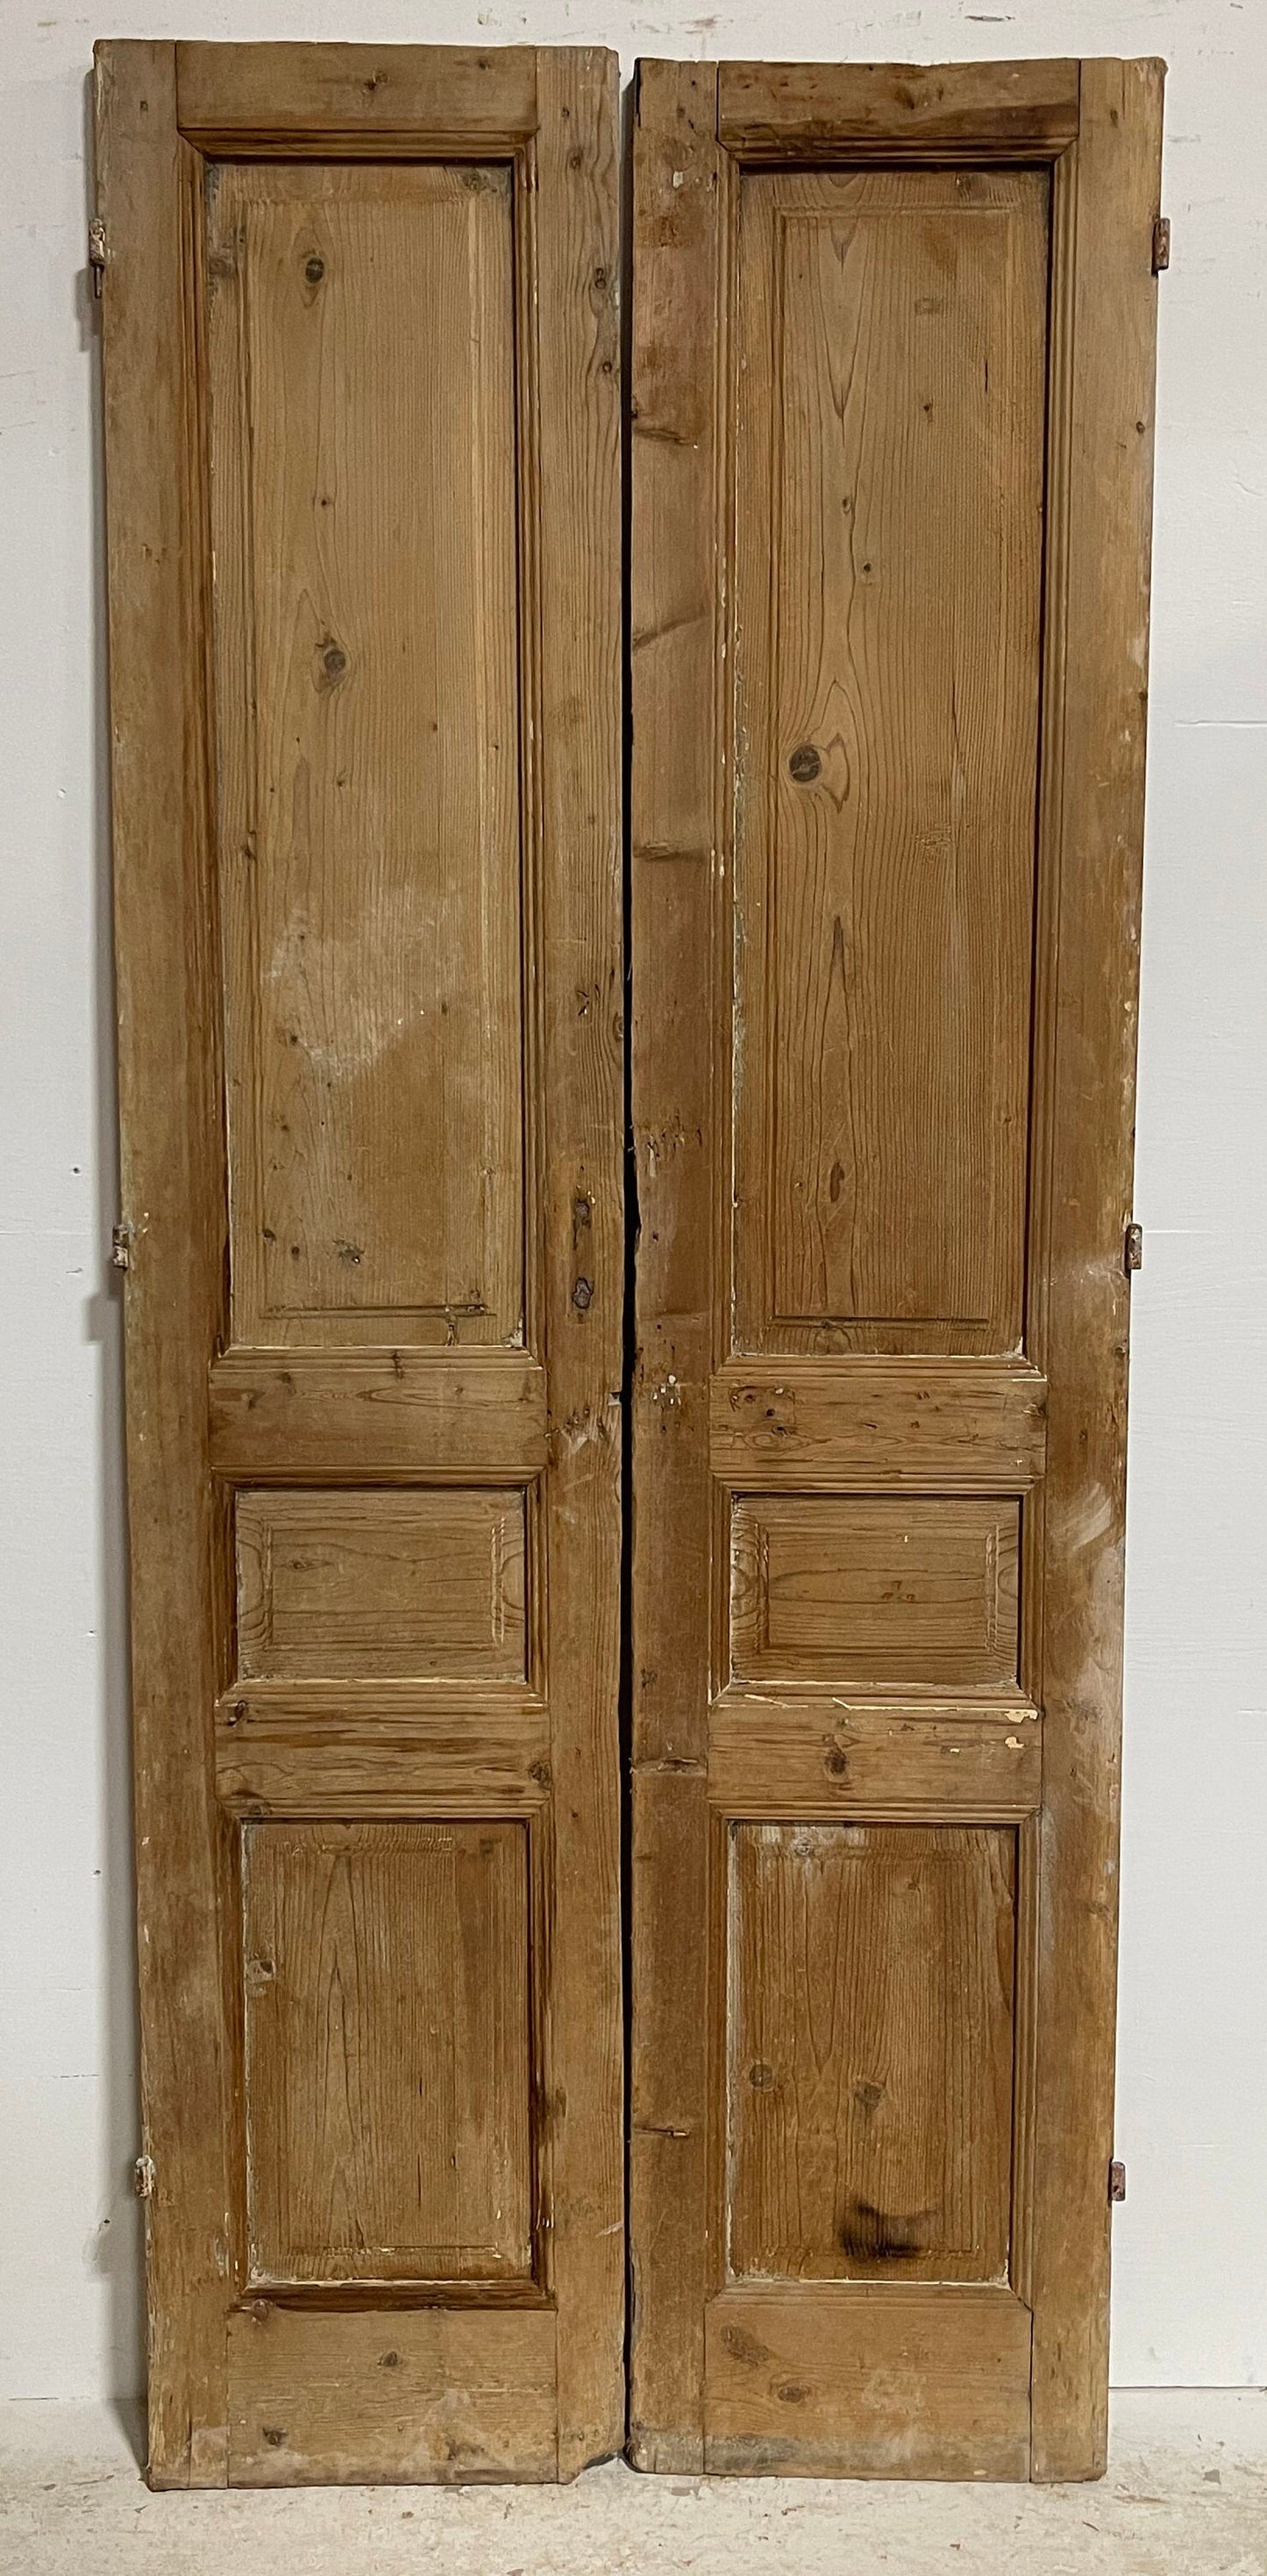 Antique French panel doors (90x37.25) H0063(B)s